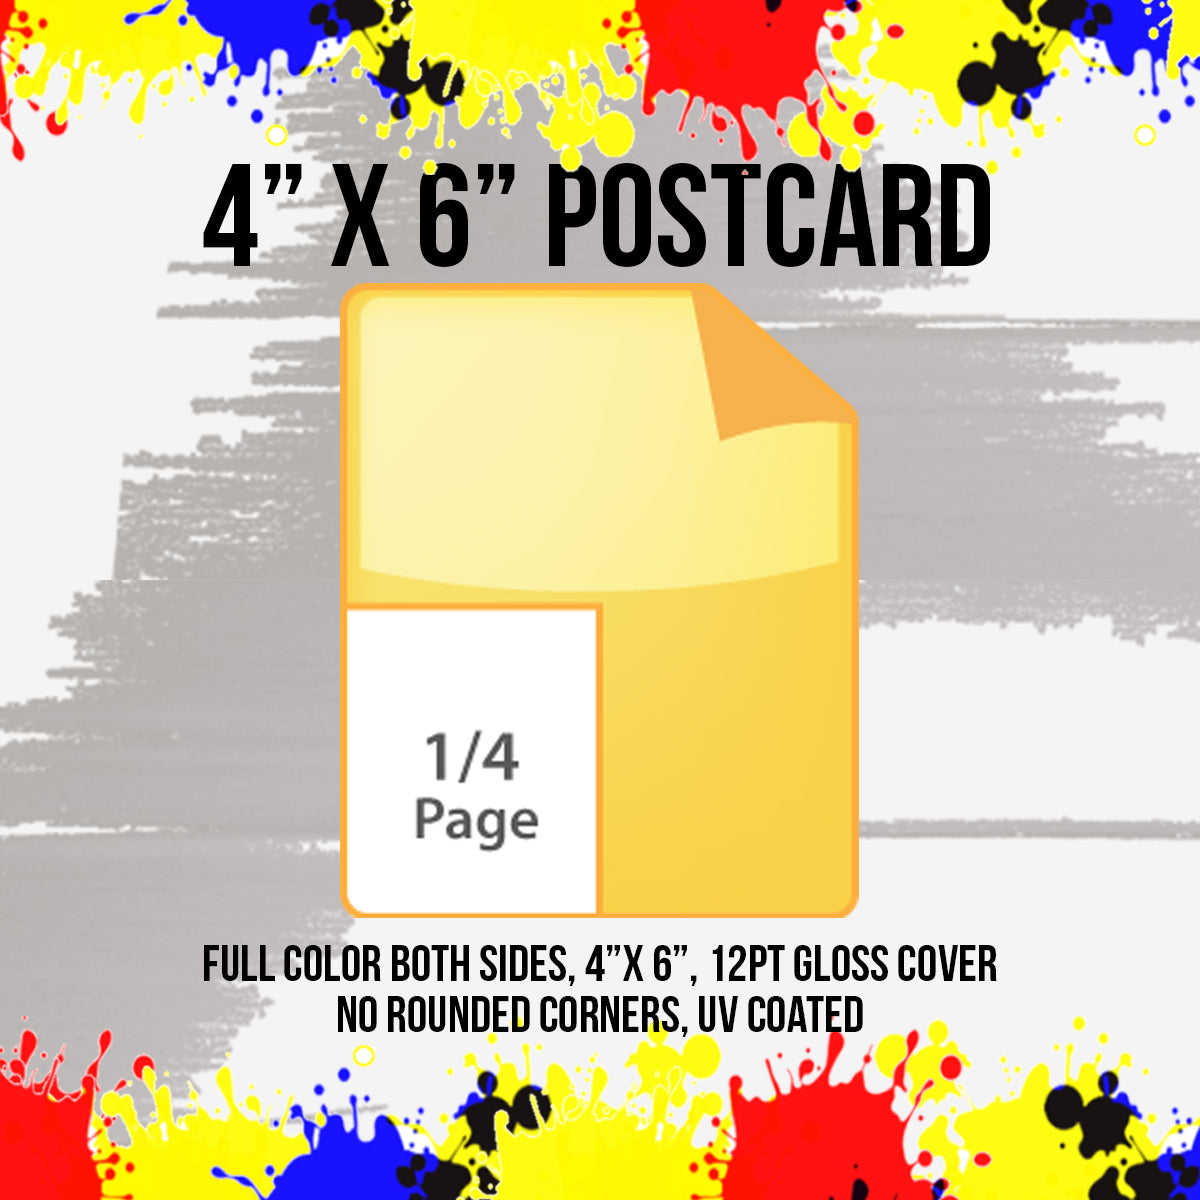 4x6 postcard template